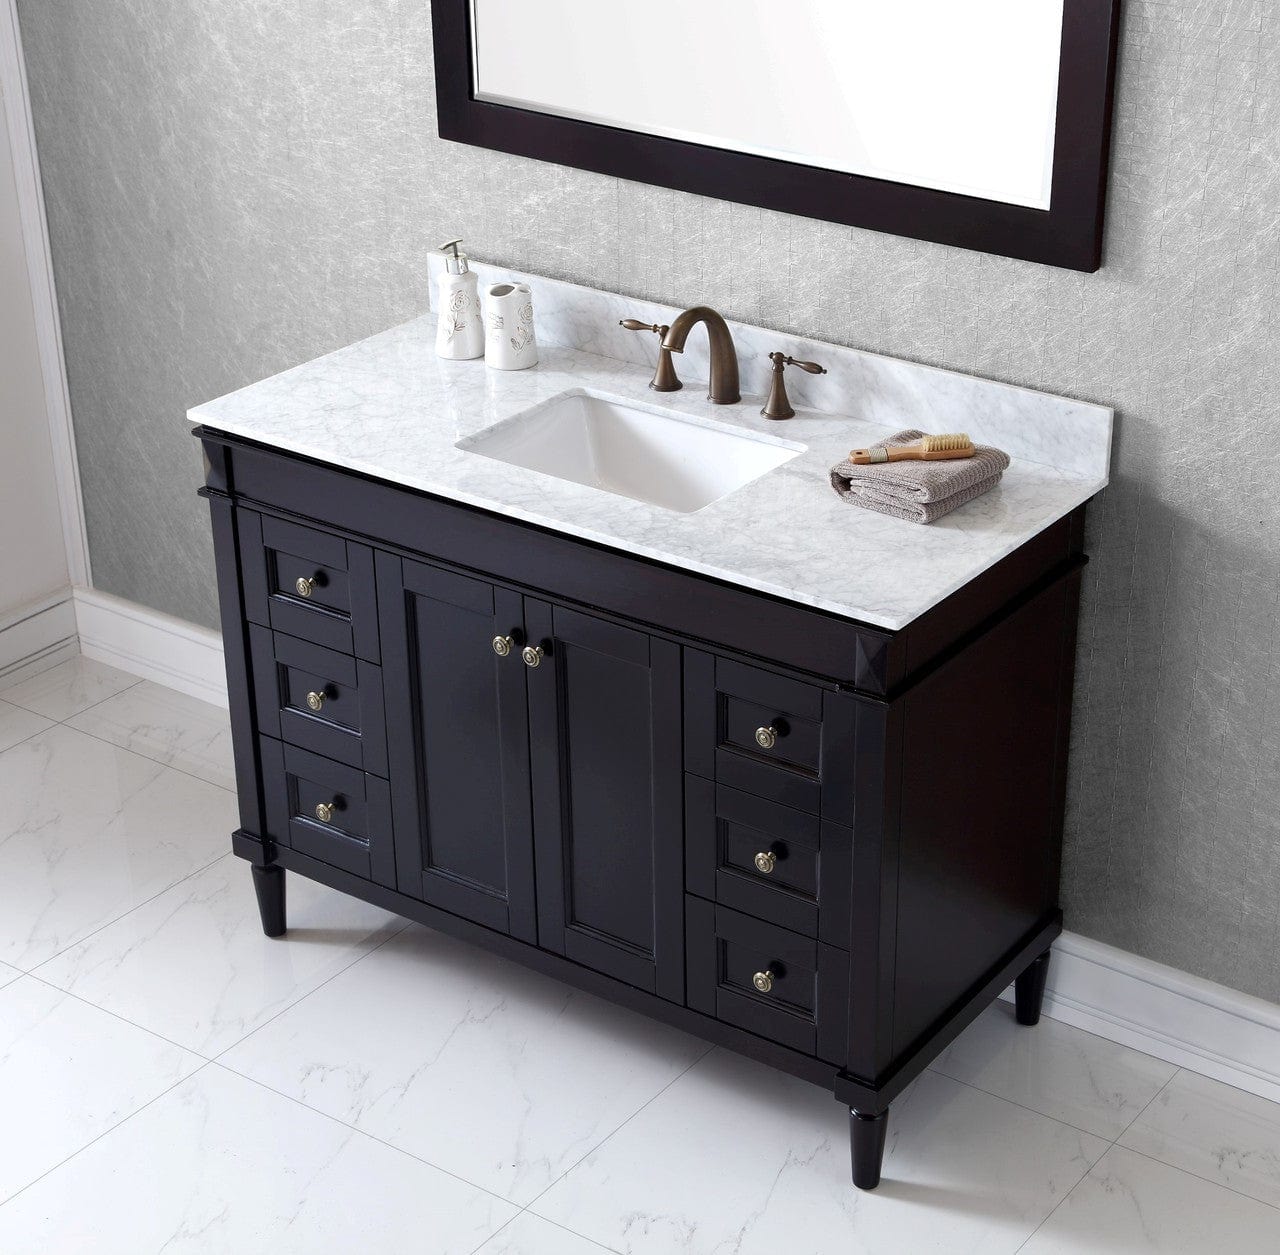 Virtu USA Tiffany 48 Single Bathroom Vanity Set in Espresso w/ Italian Carrara White Marble Counter-Top | Square Basin